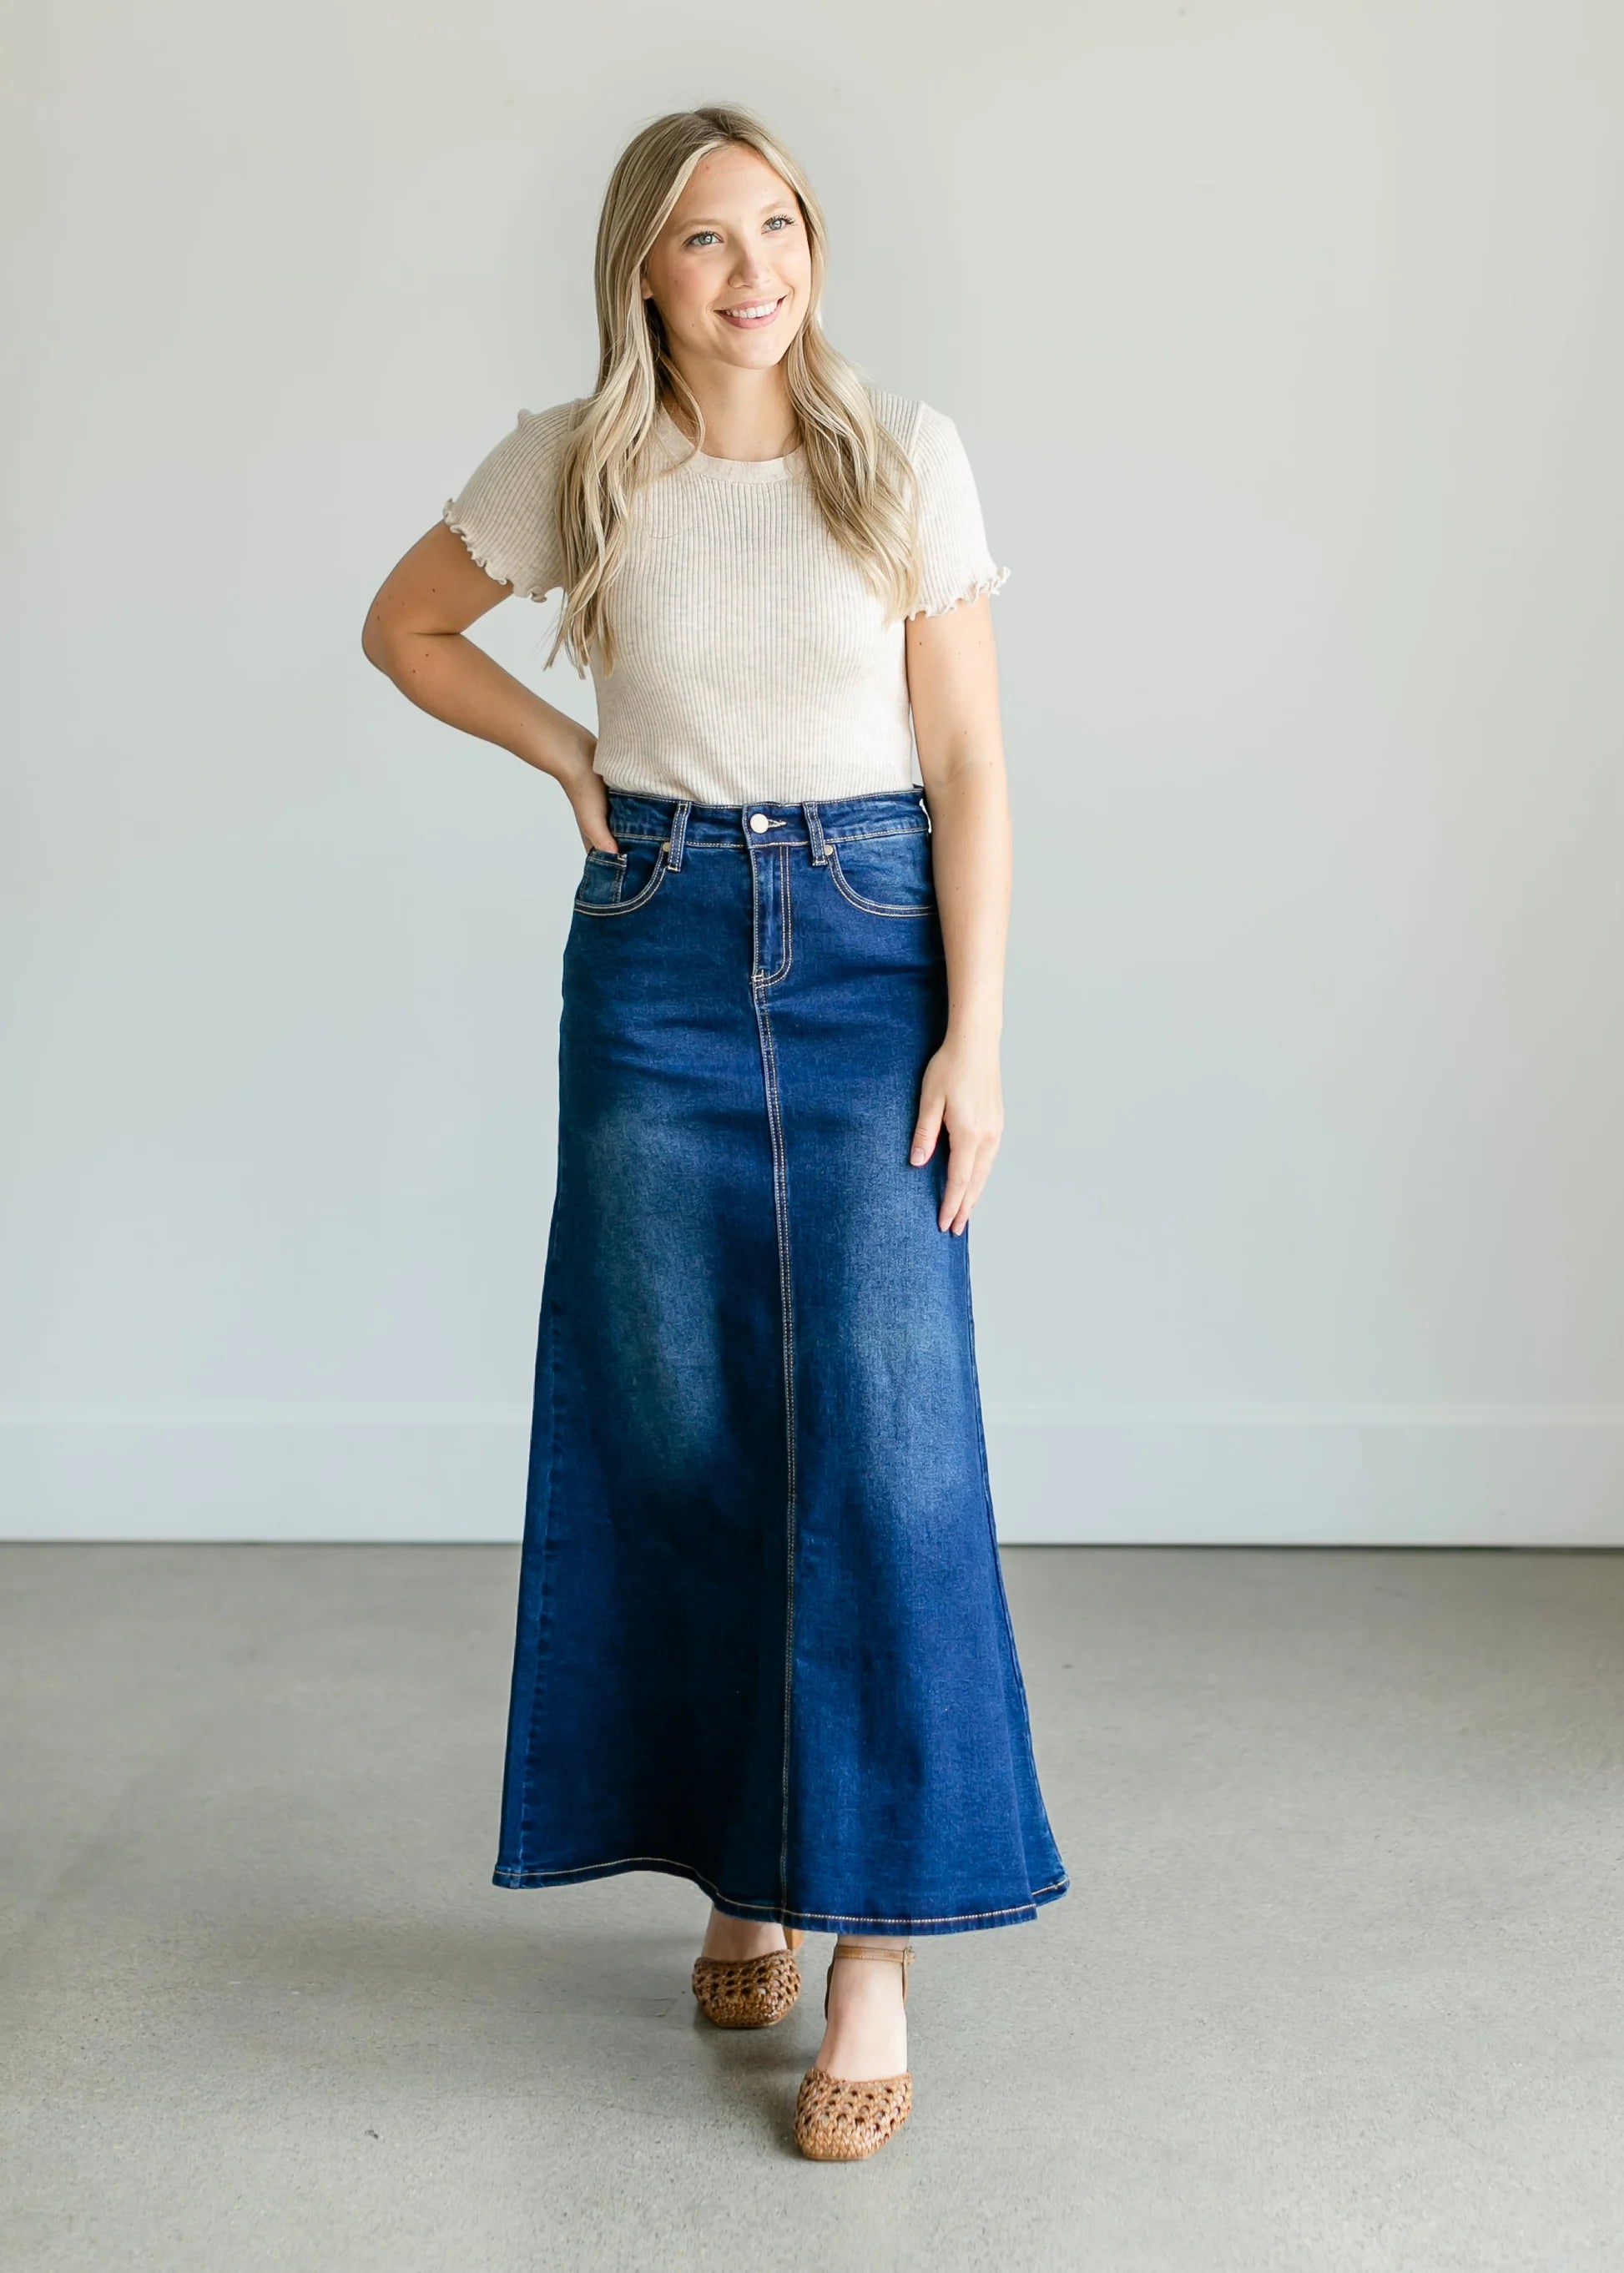 Styling Your Denim Maxi Skirt Year-Round – Inherit Co.